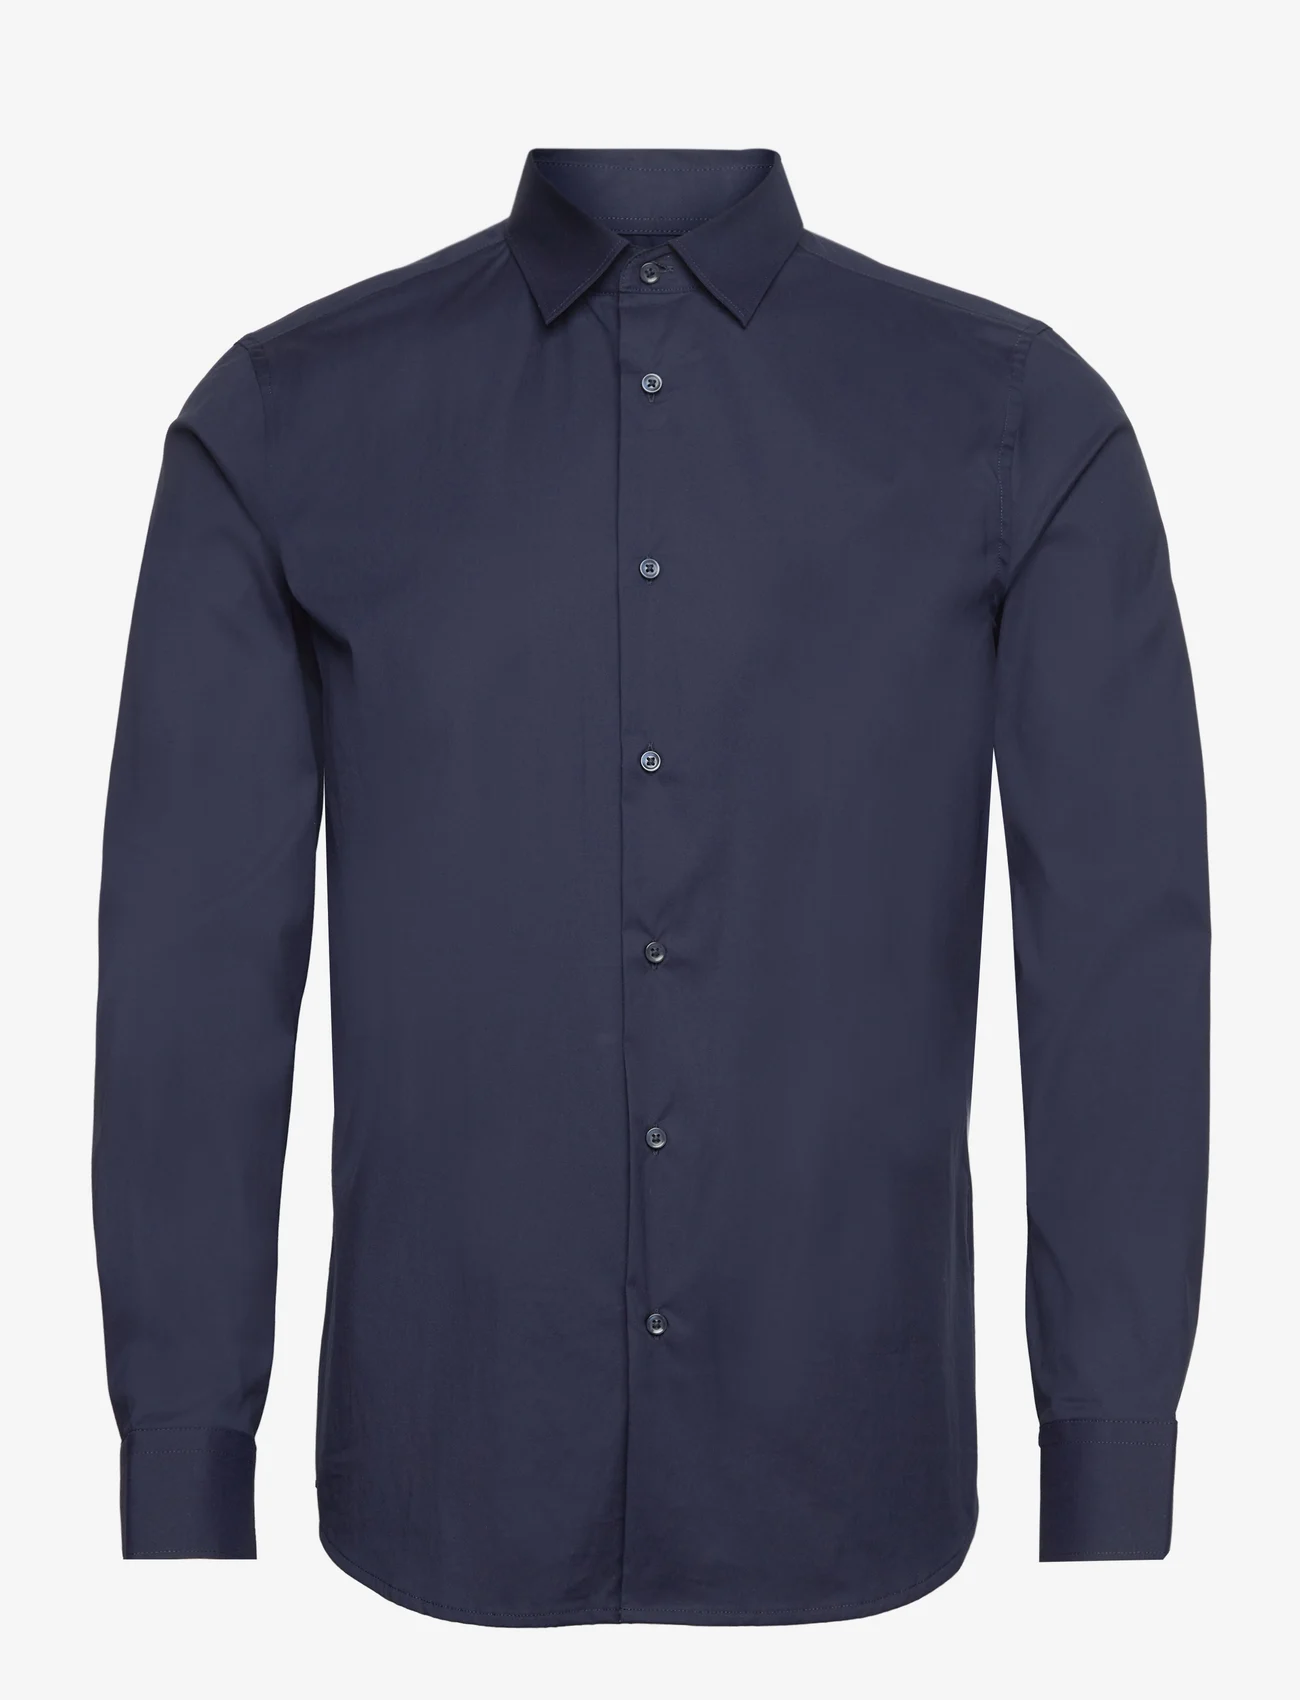 United Colors of Benetton - SHIRT - business skjorter - night blue - 0